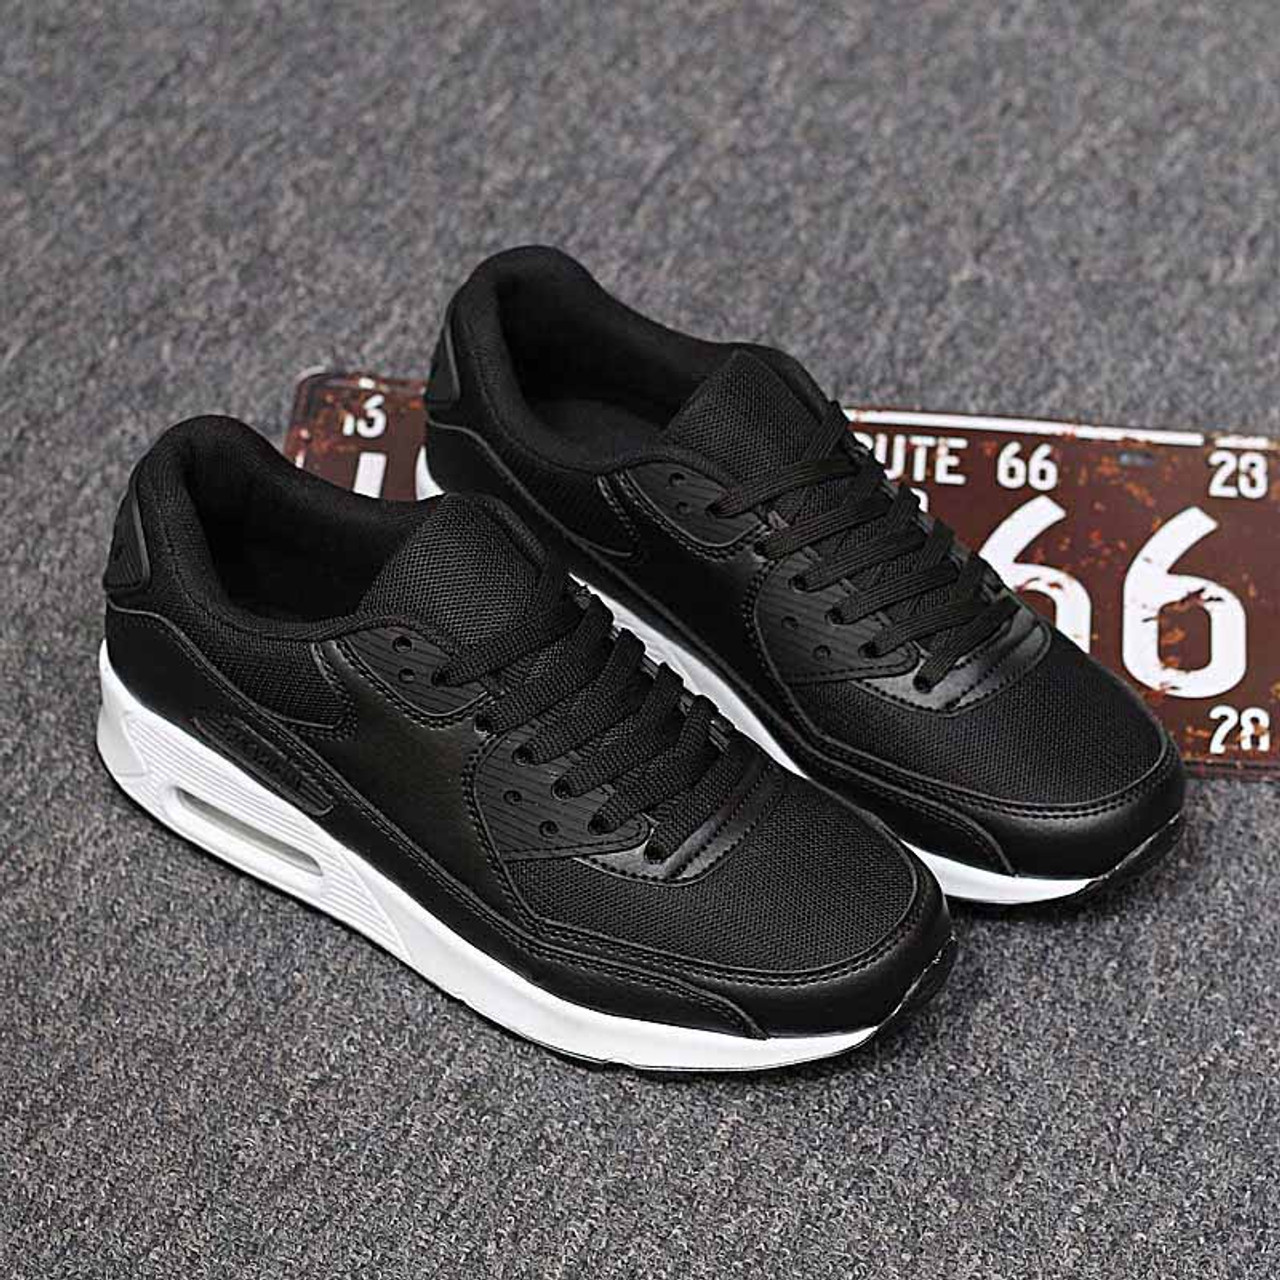 Black leather air sole sport shoe sneaker | Womens sneakers online 1615WS